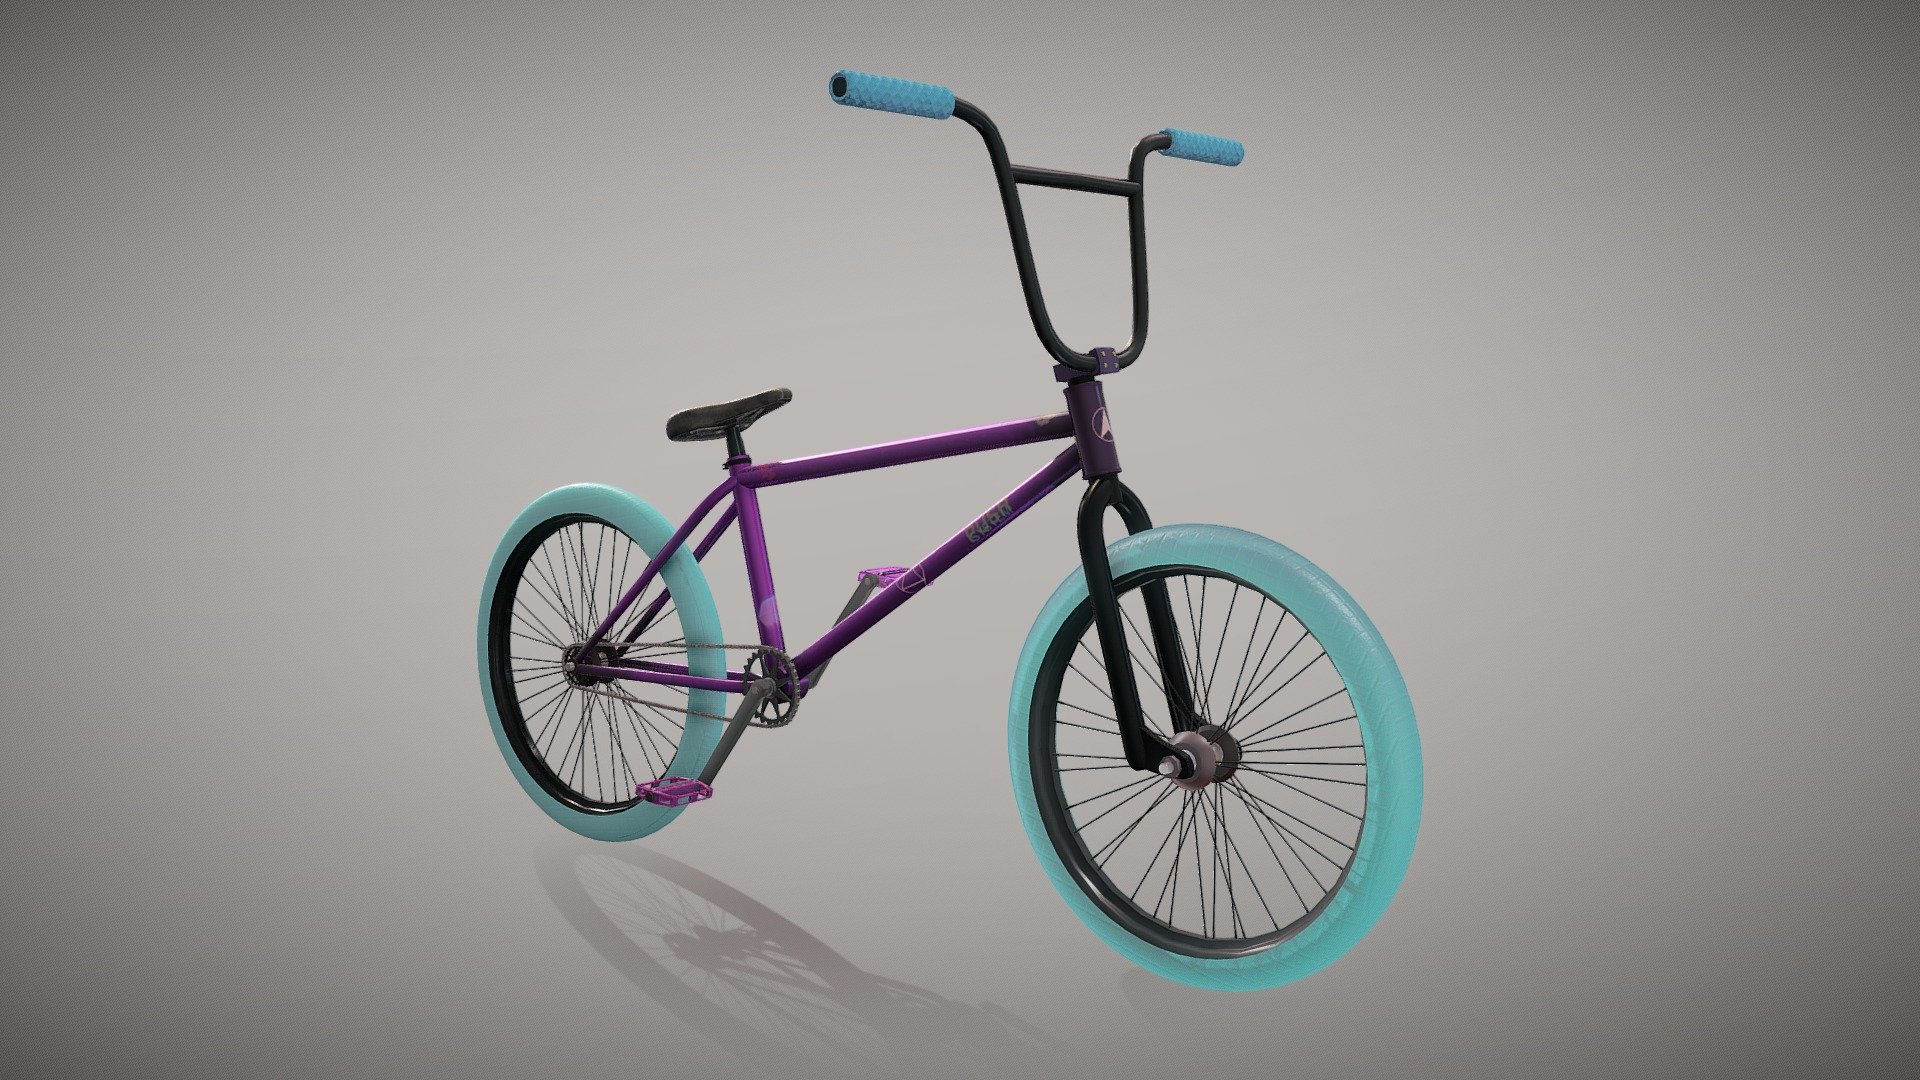 Atr_Strudio Bmx bike.
Made in 3dsmax and texturiced on SubstancePainter 3d model